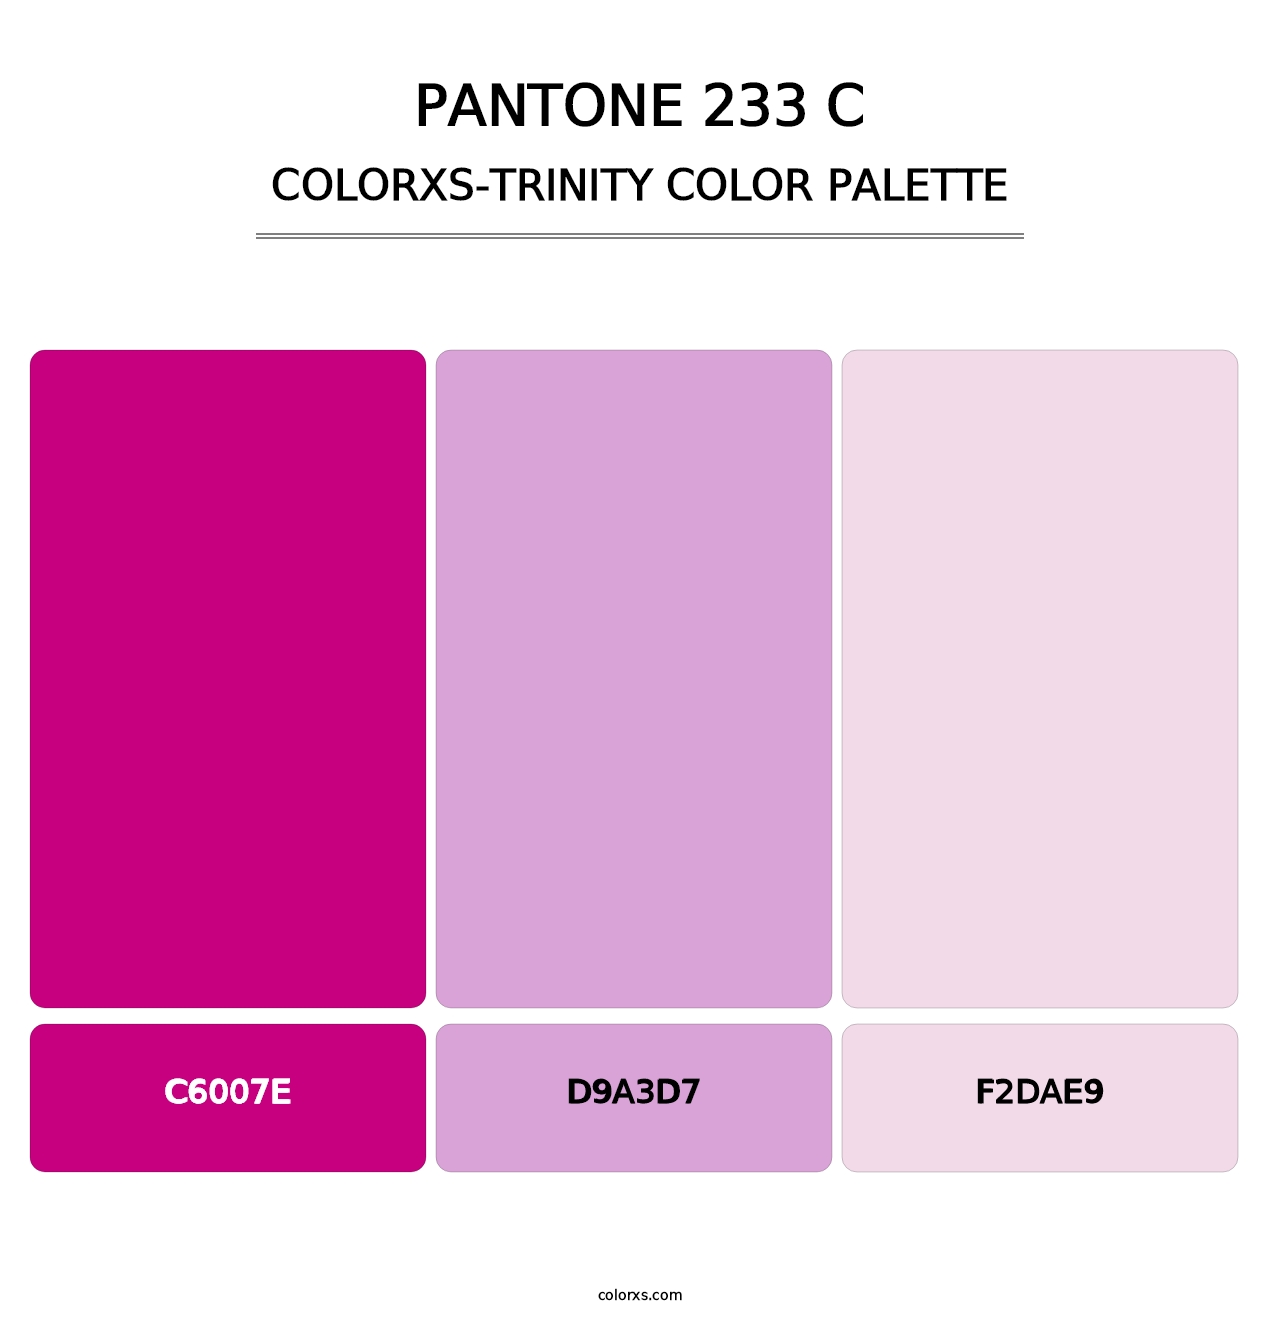 PANTONE 233 C - Colorxs Trinity Palette